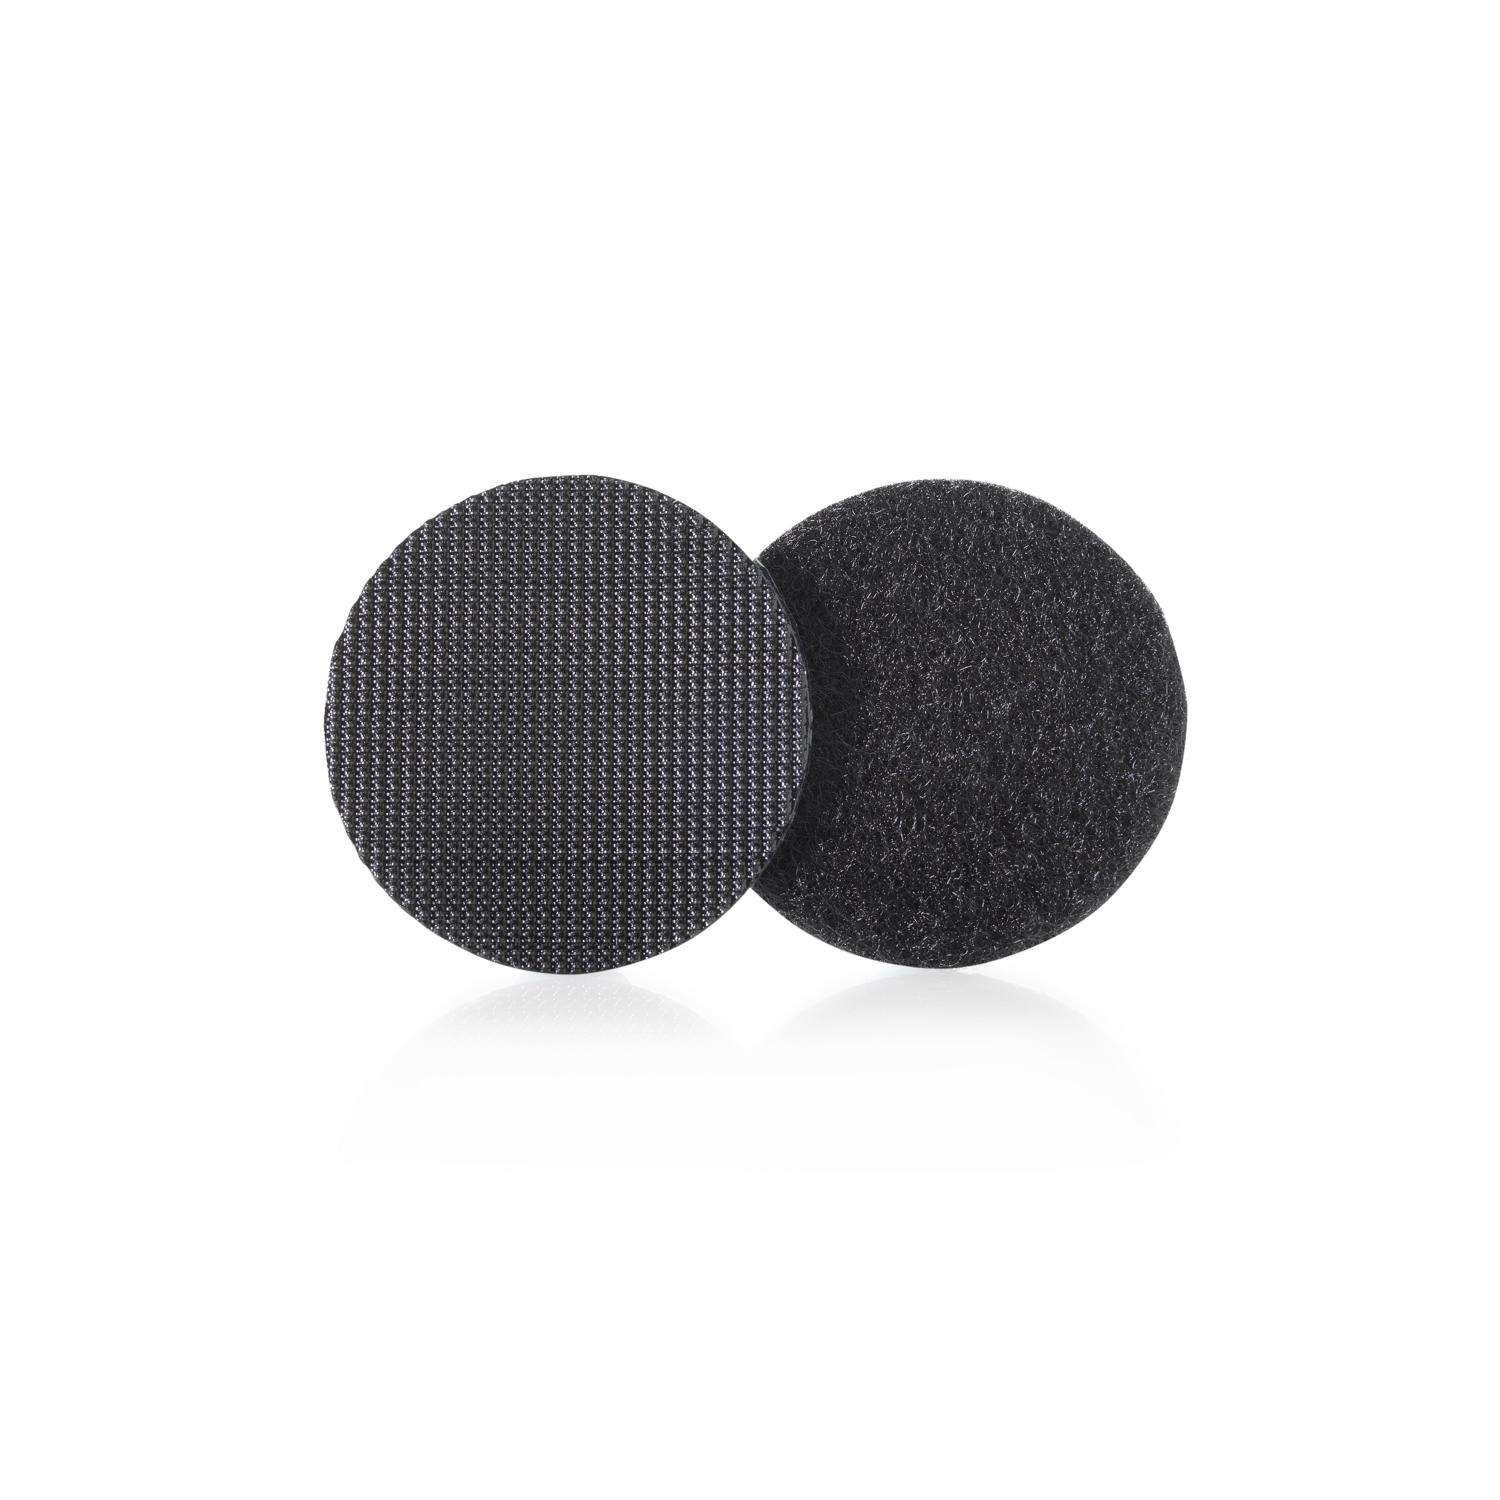 3/8 - Loop - Black VELCRO Brand Tape - Individual Dots